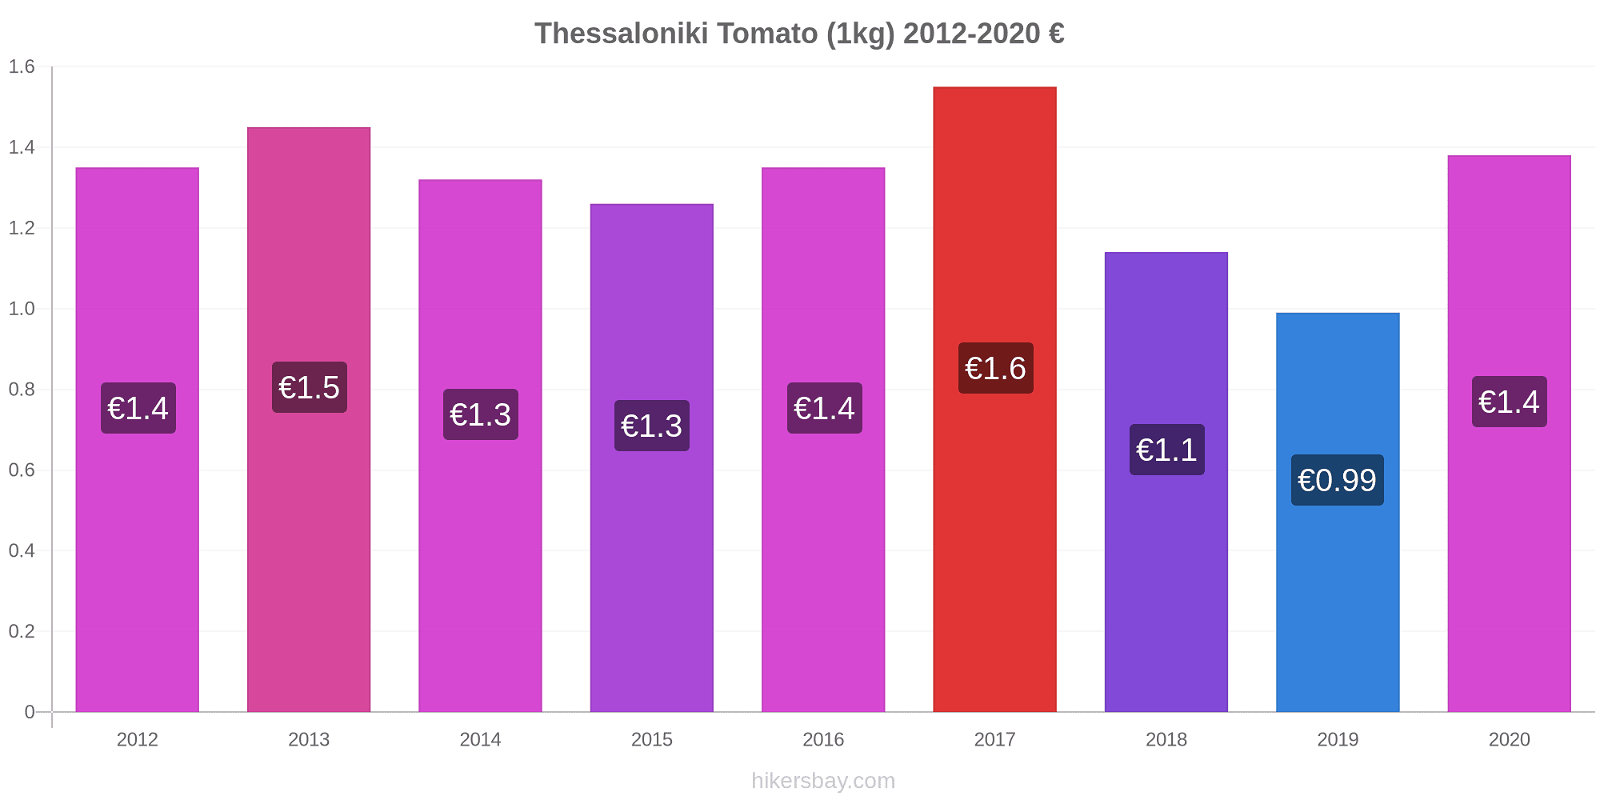 Thessaloniki price changes Tomato (1kg) hikersbay.com